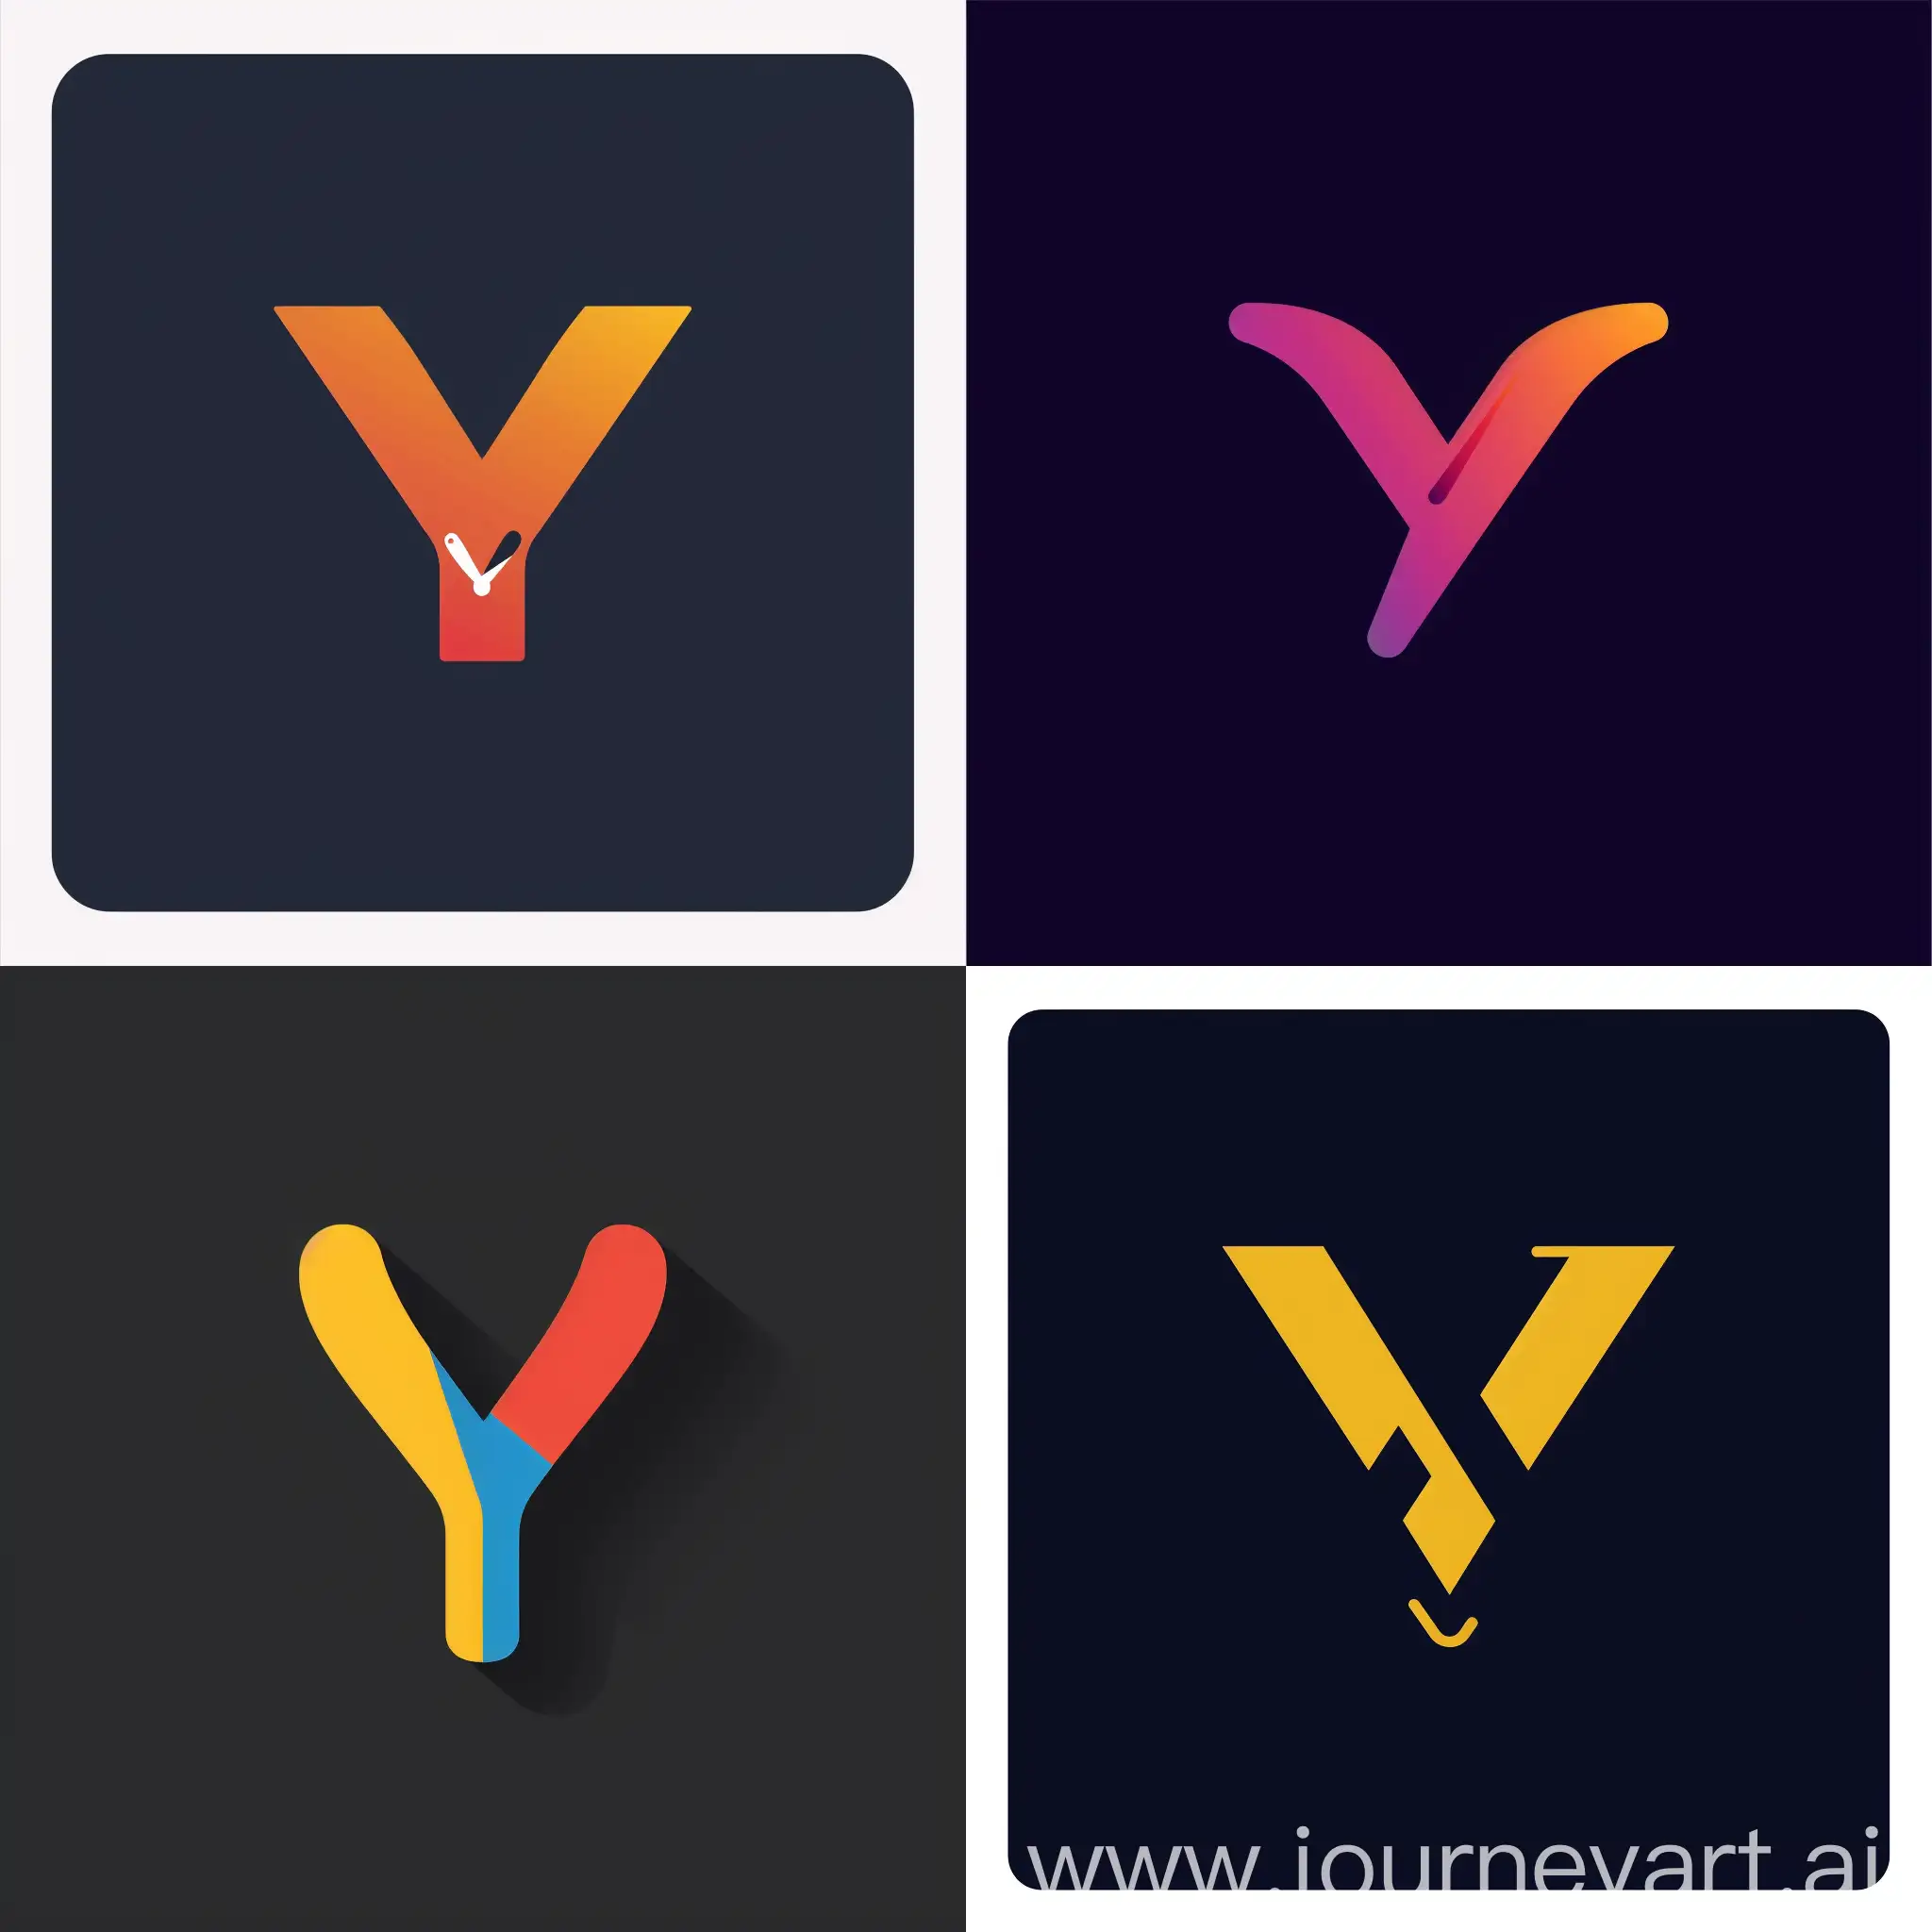 simple logo design of letter “Y”, vector, flat 2d, company logo